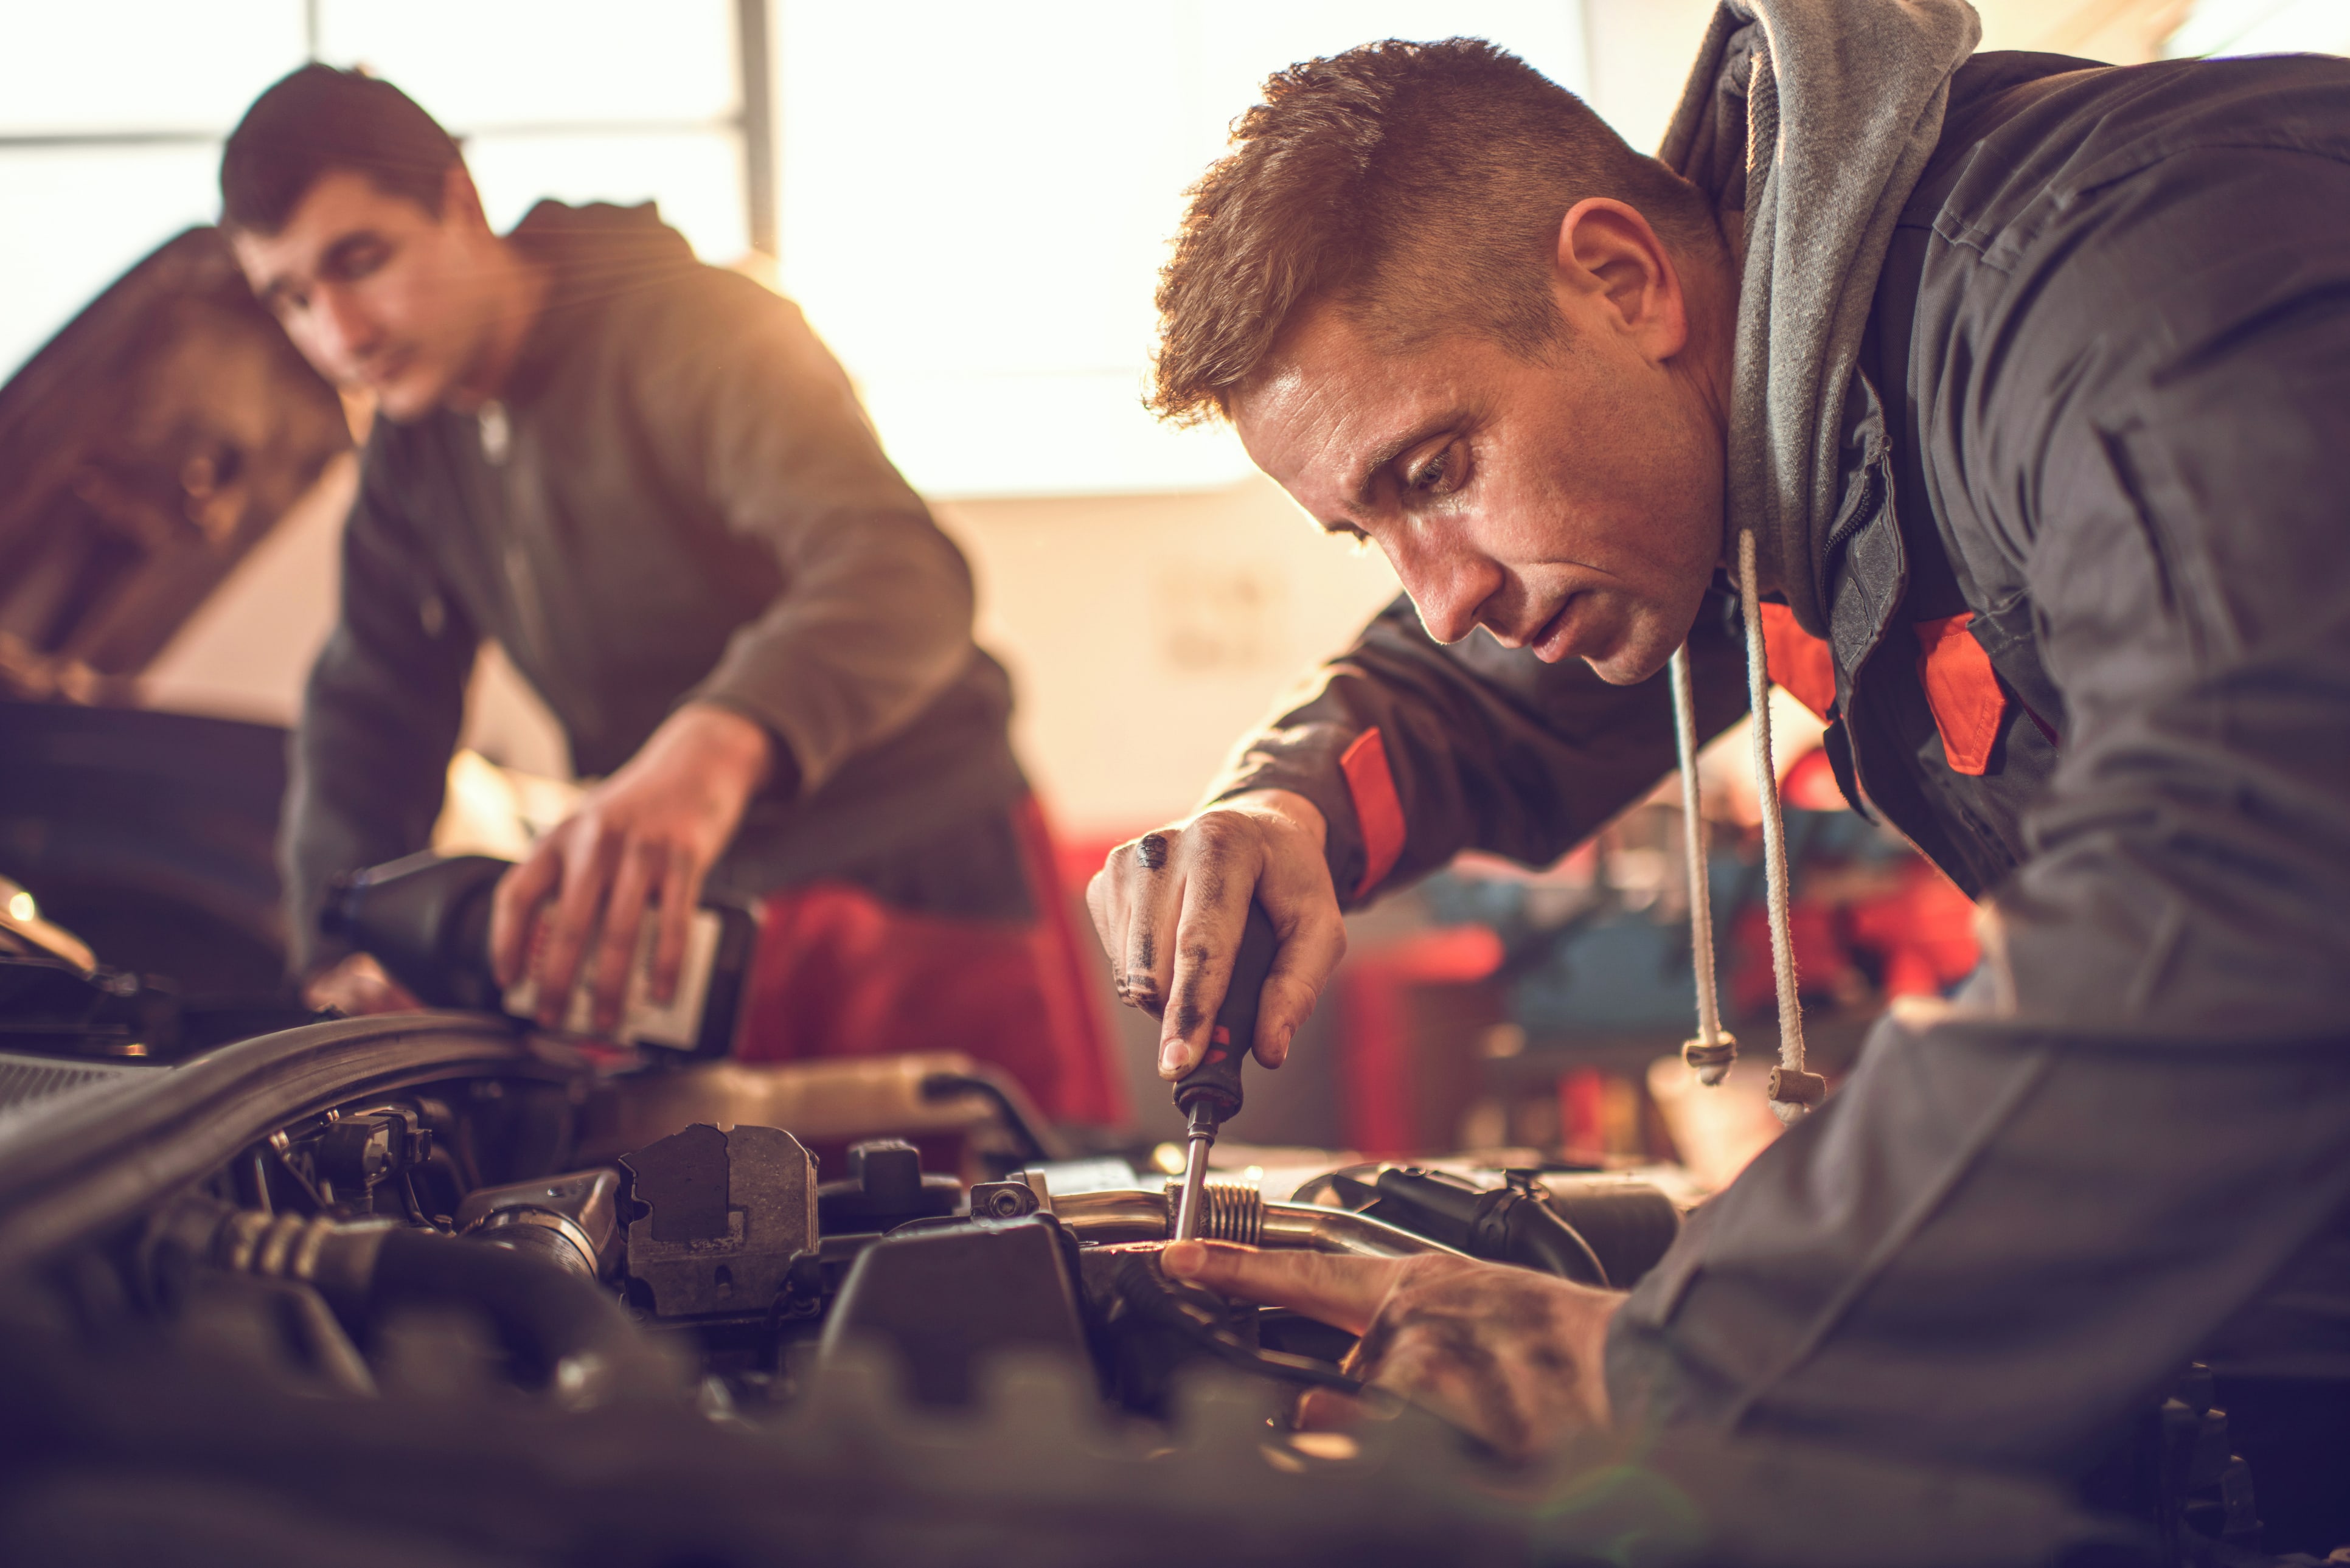 Men work on car engines